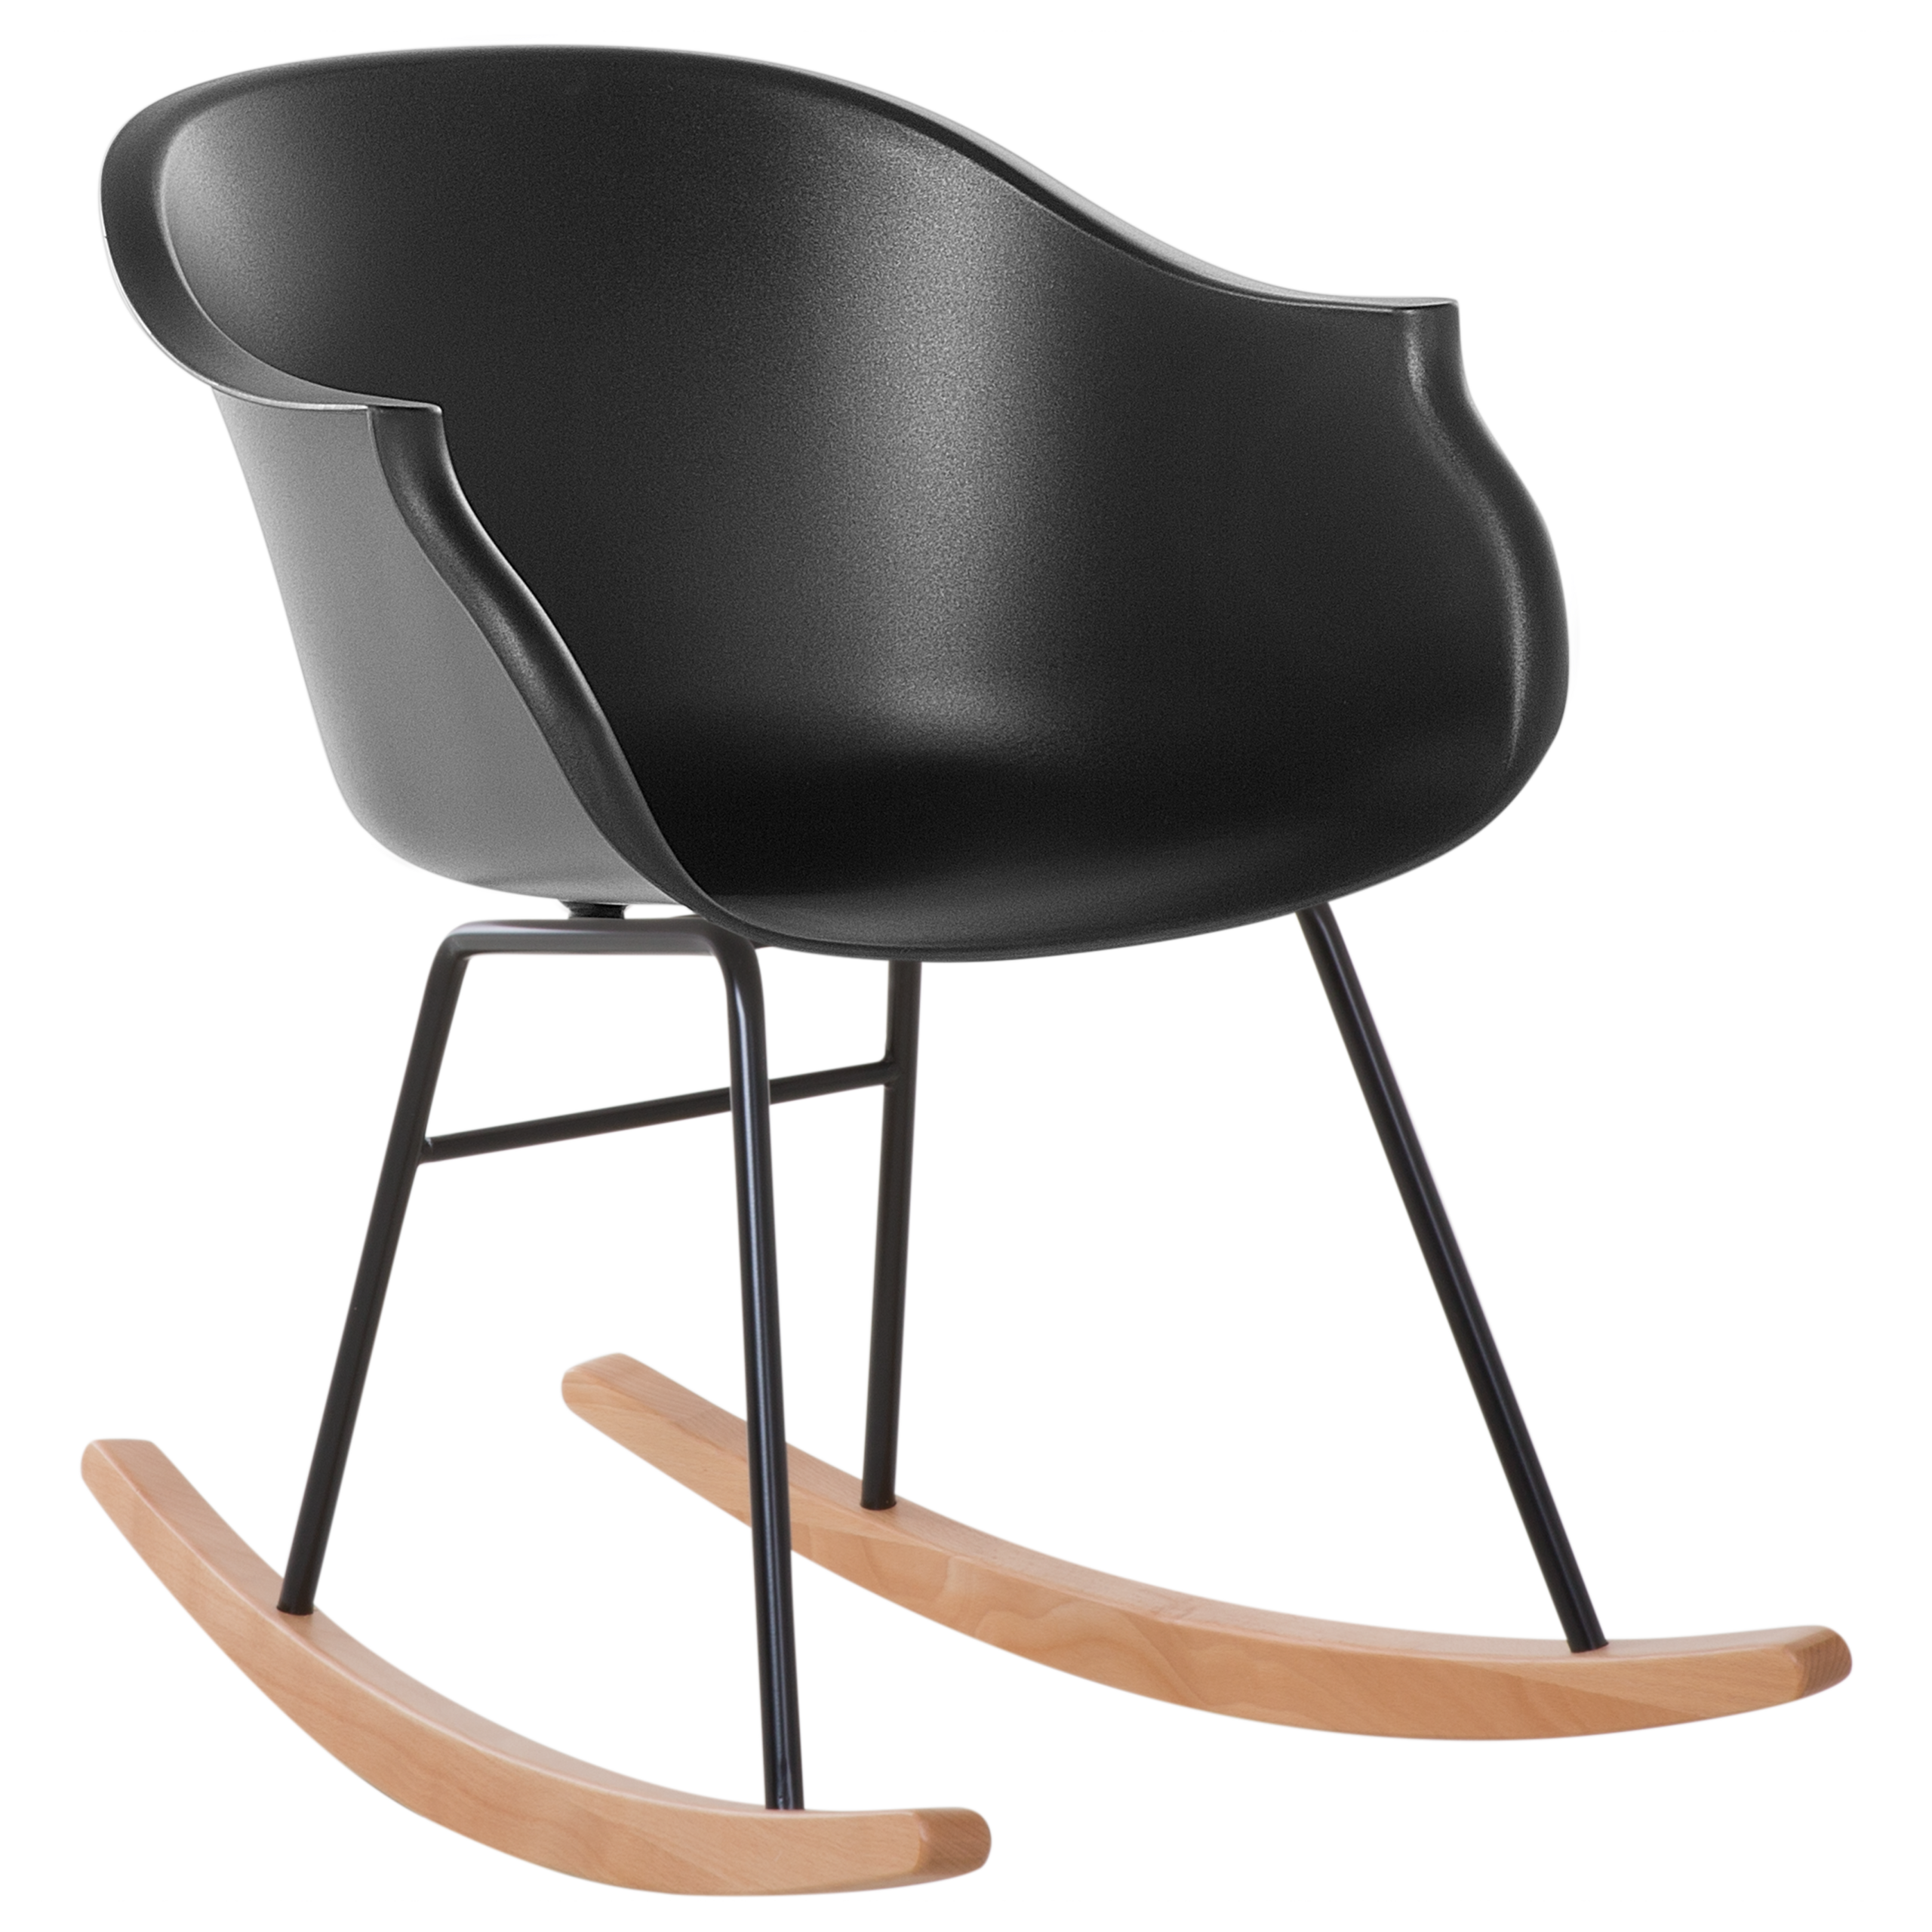 Beliani Rocking Chair Black Synthetic Material Metal Legs Shell Seat Solid Wood Skates Modern Scandinavian Style